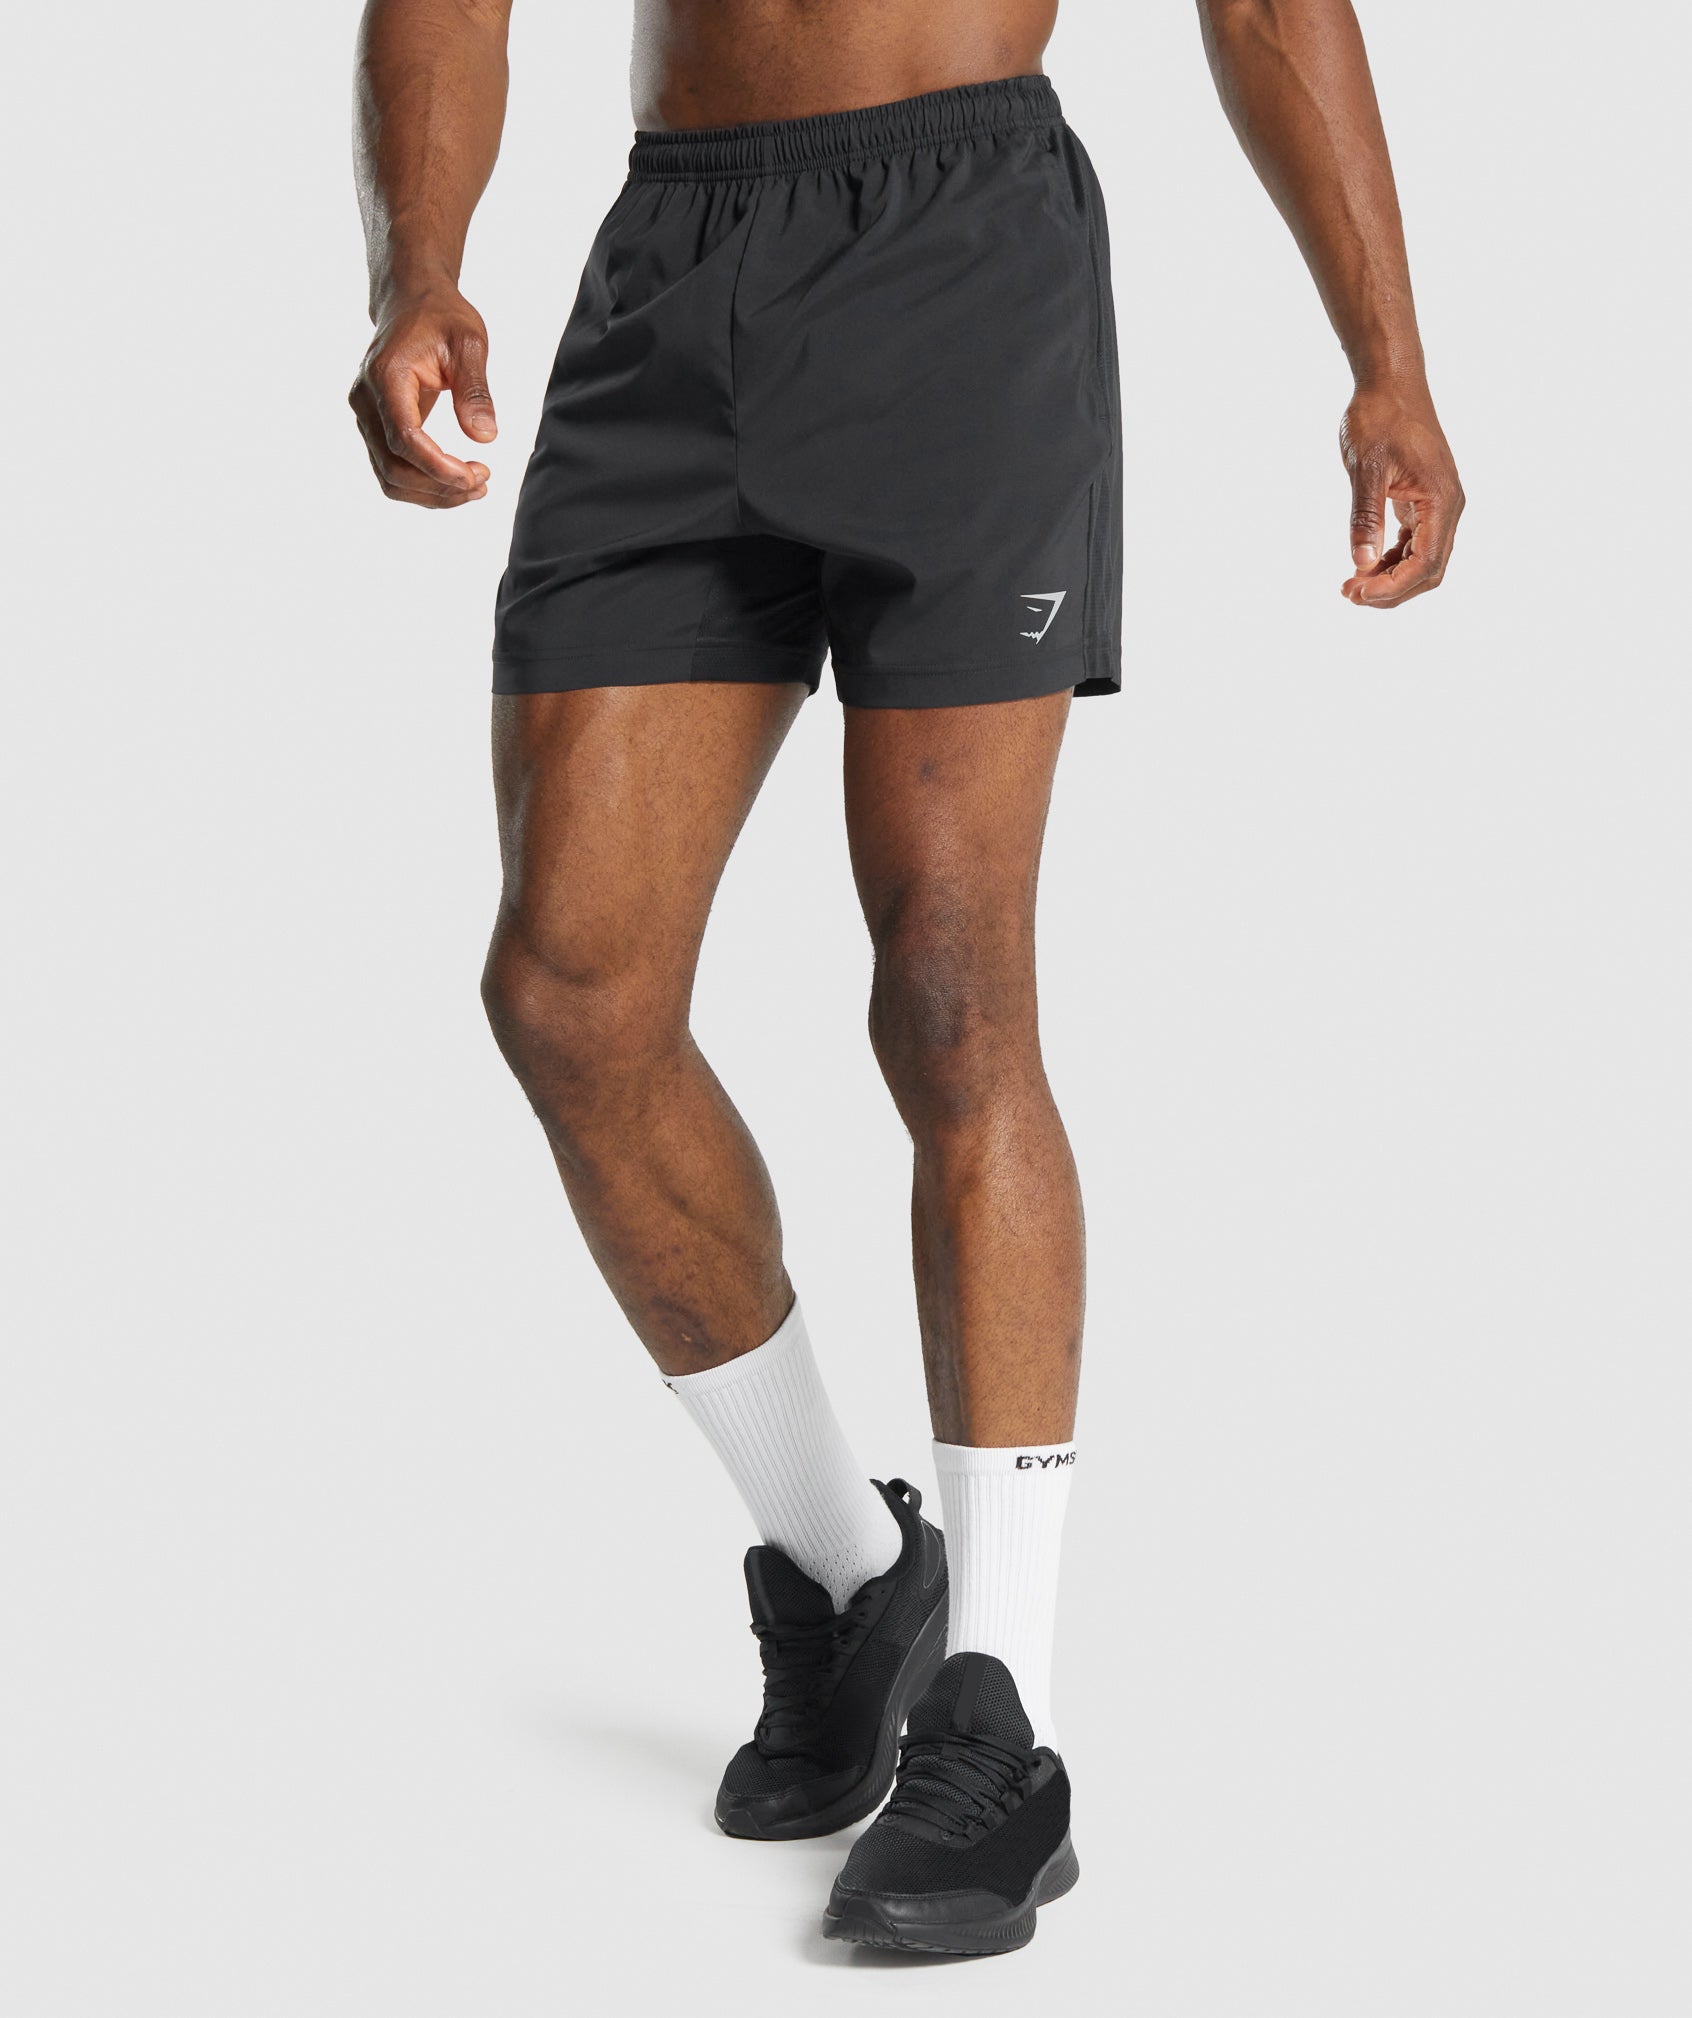 Men's Gym Shorts & Sport Shorts - Gymshark